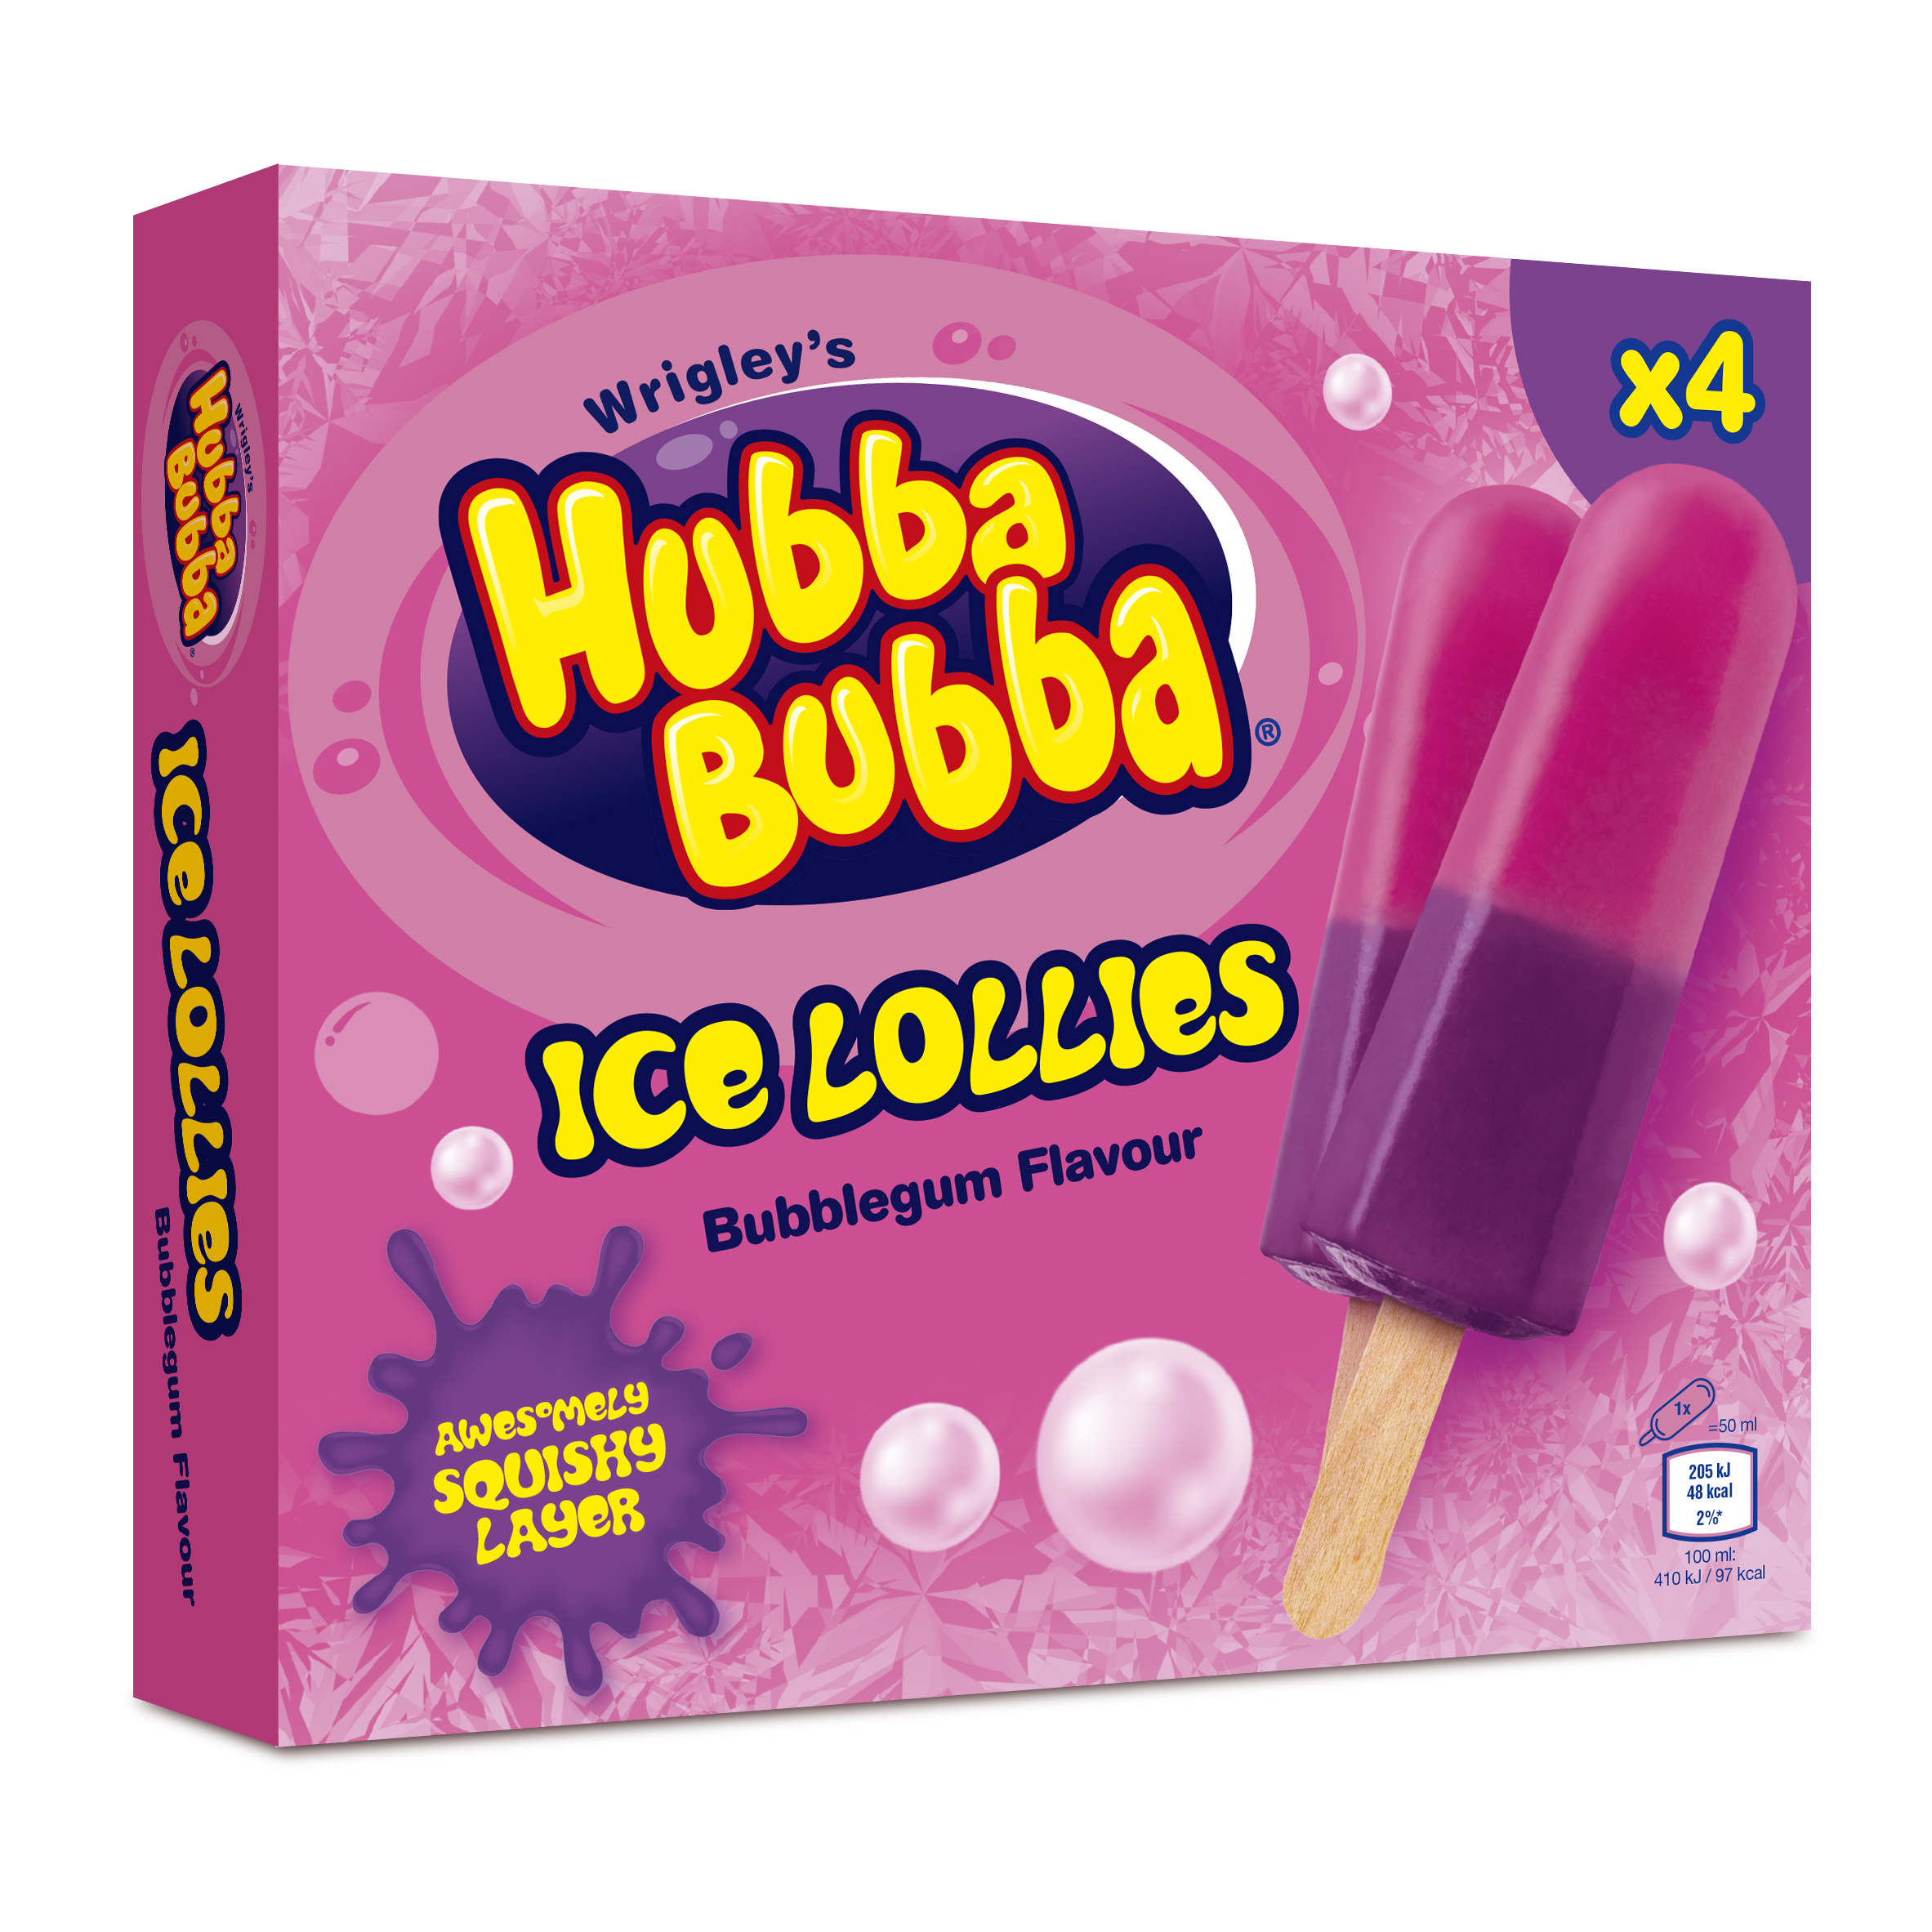 MCD&T unwraps new Hubba Bubba ice lolly